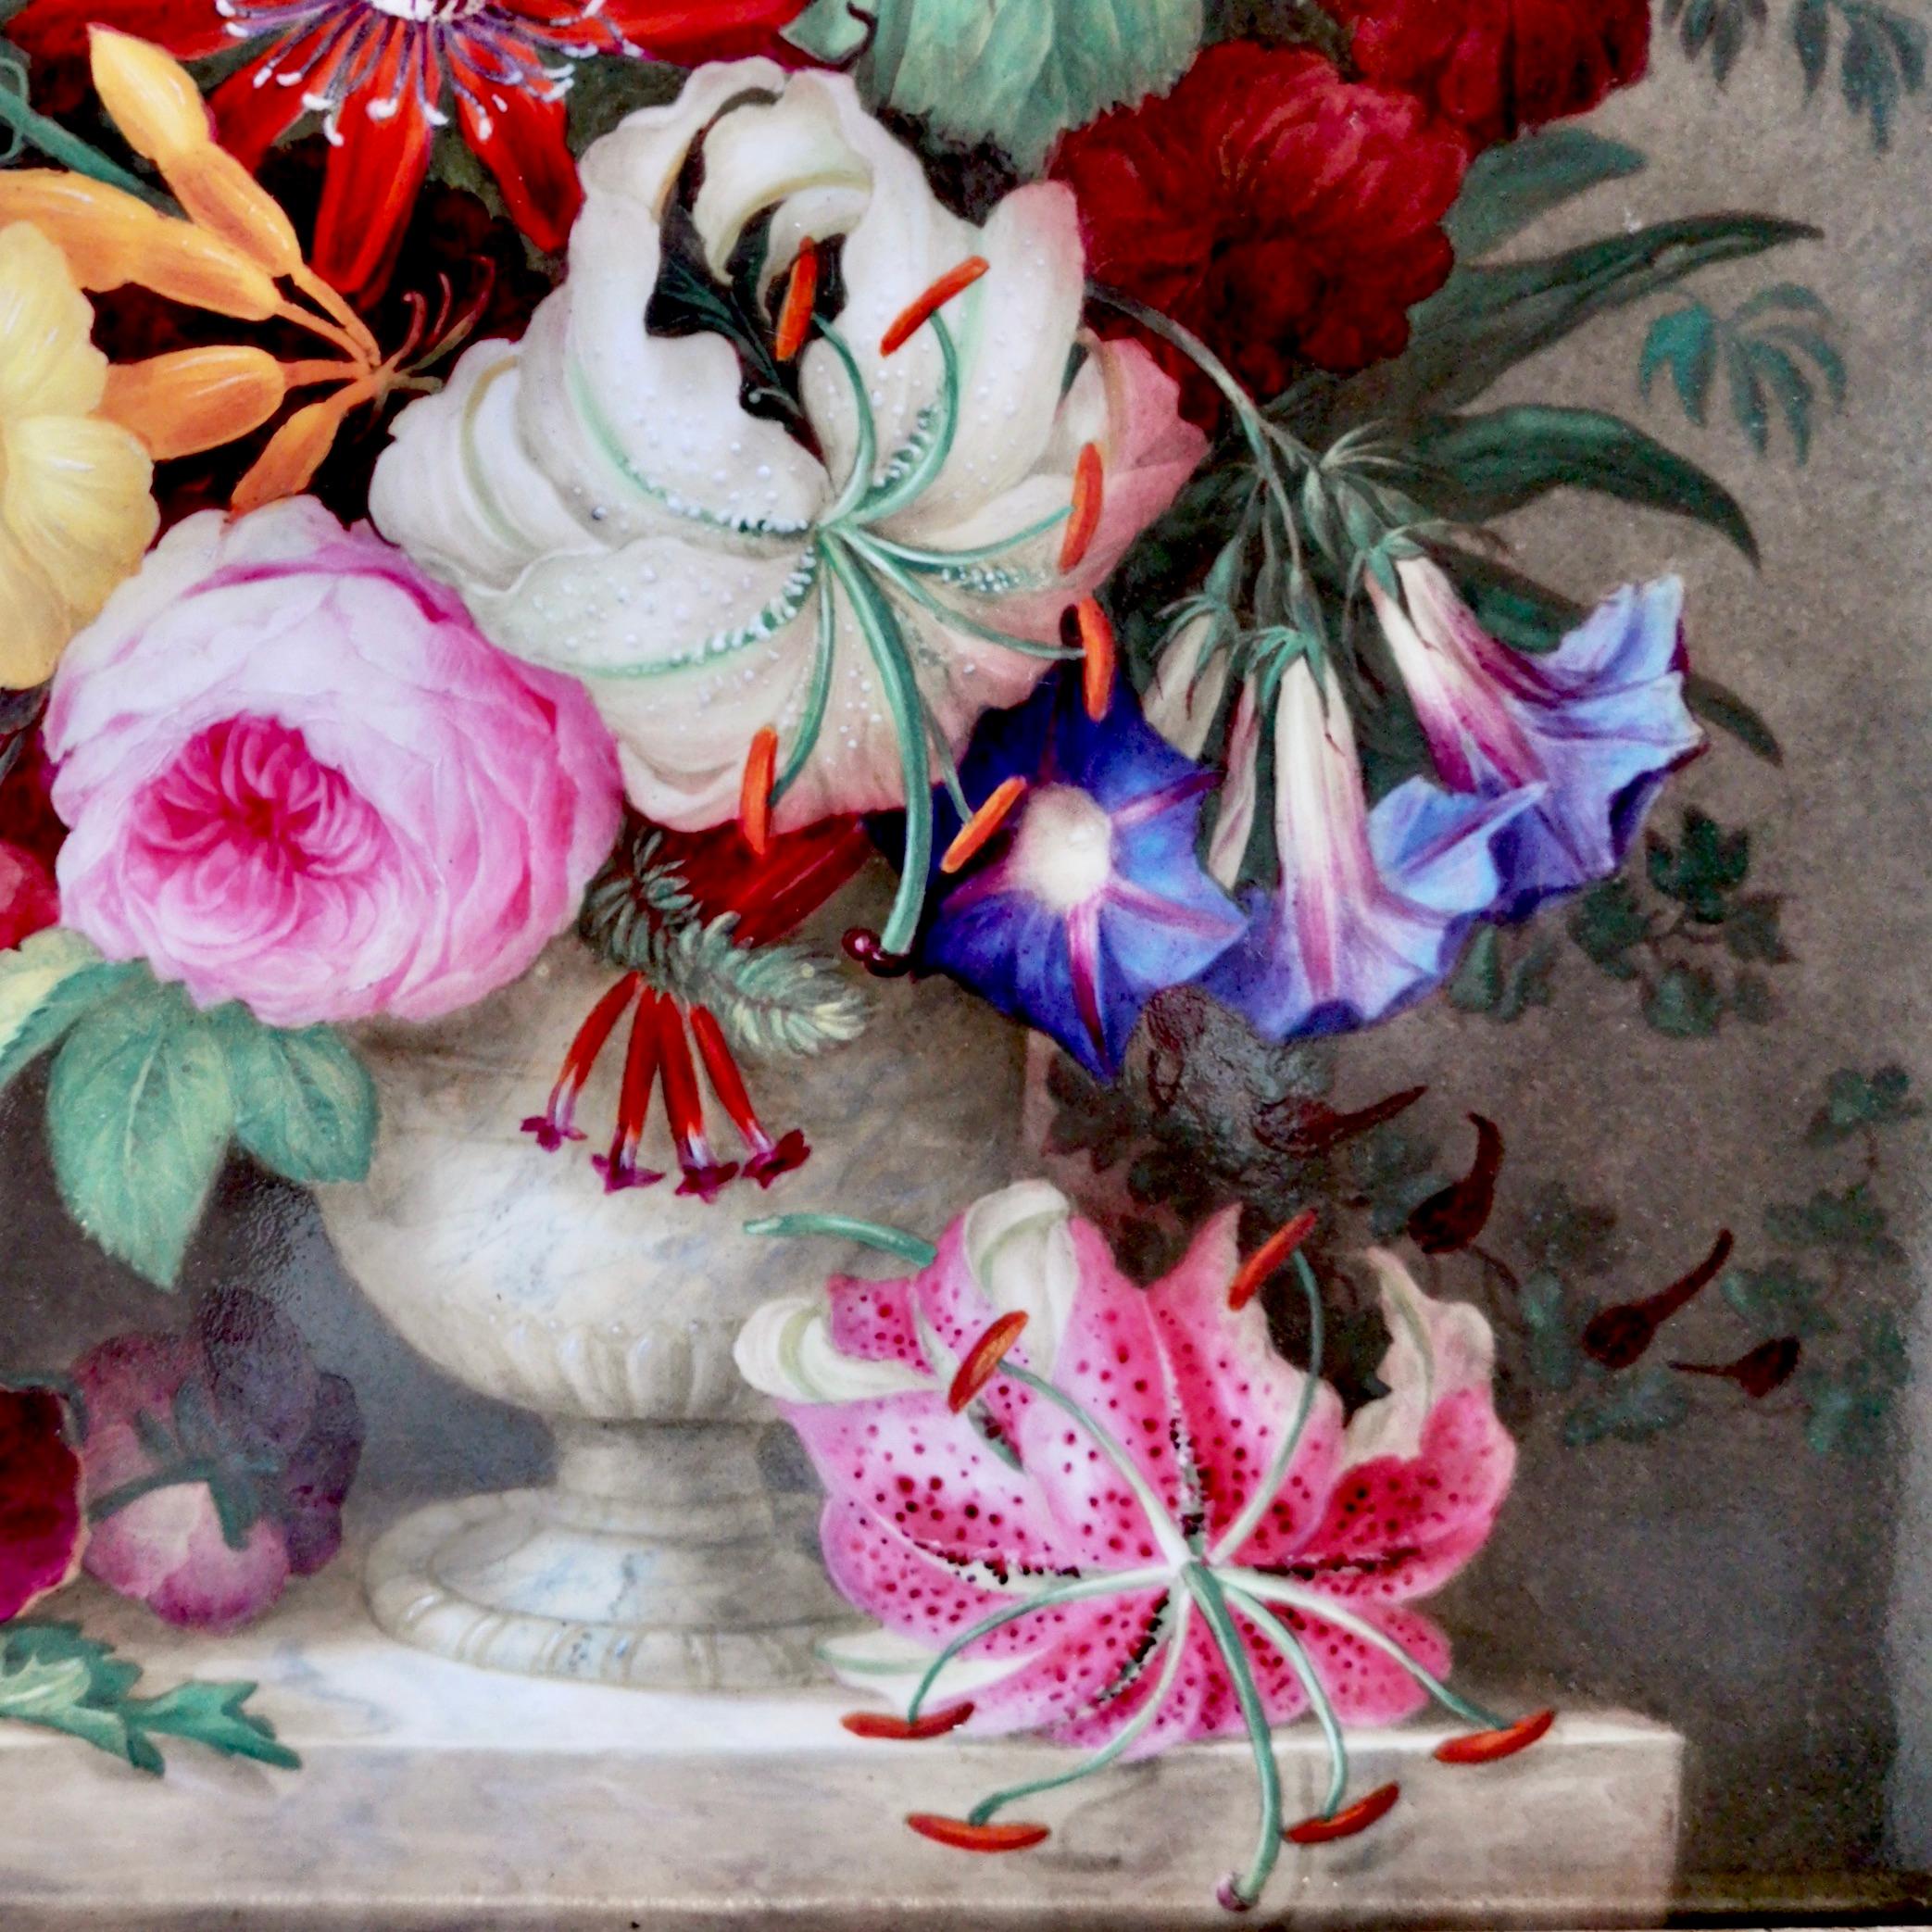 Mid-19th Century Coalport Framed Porcelain Plaque of Flower Bouquet, Victorian, circa 1840